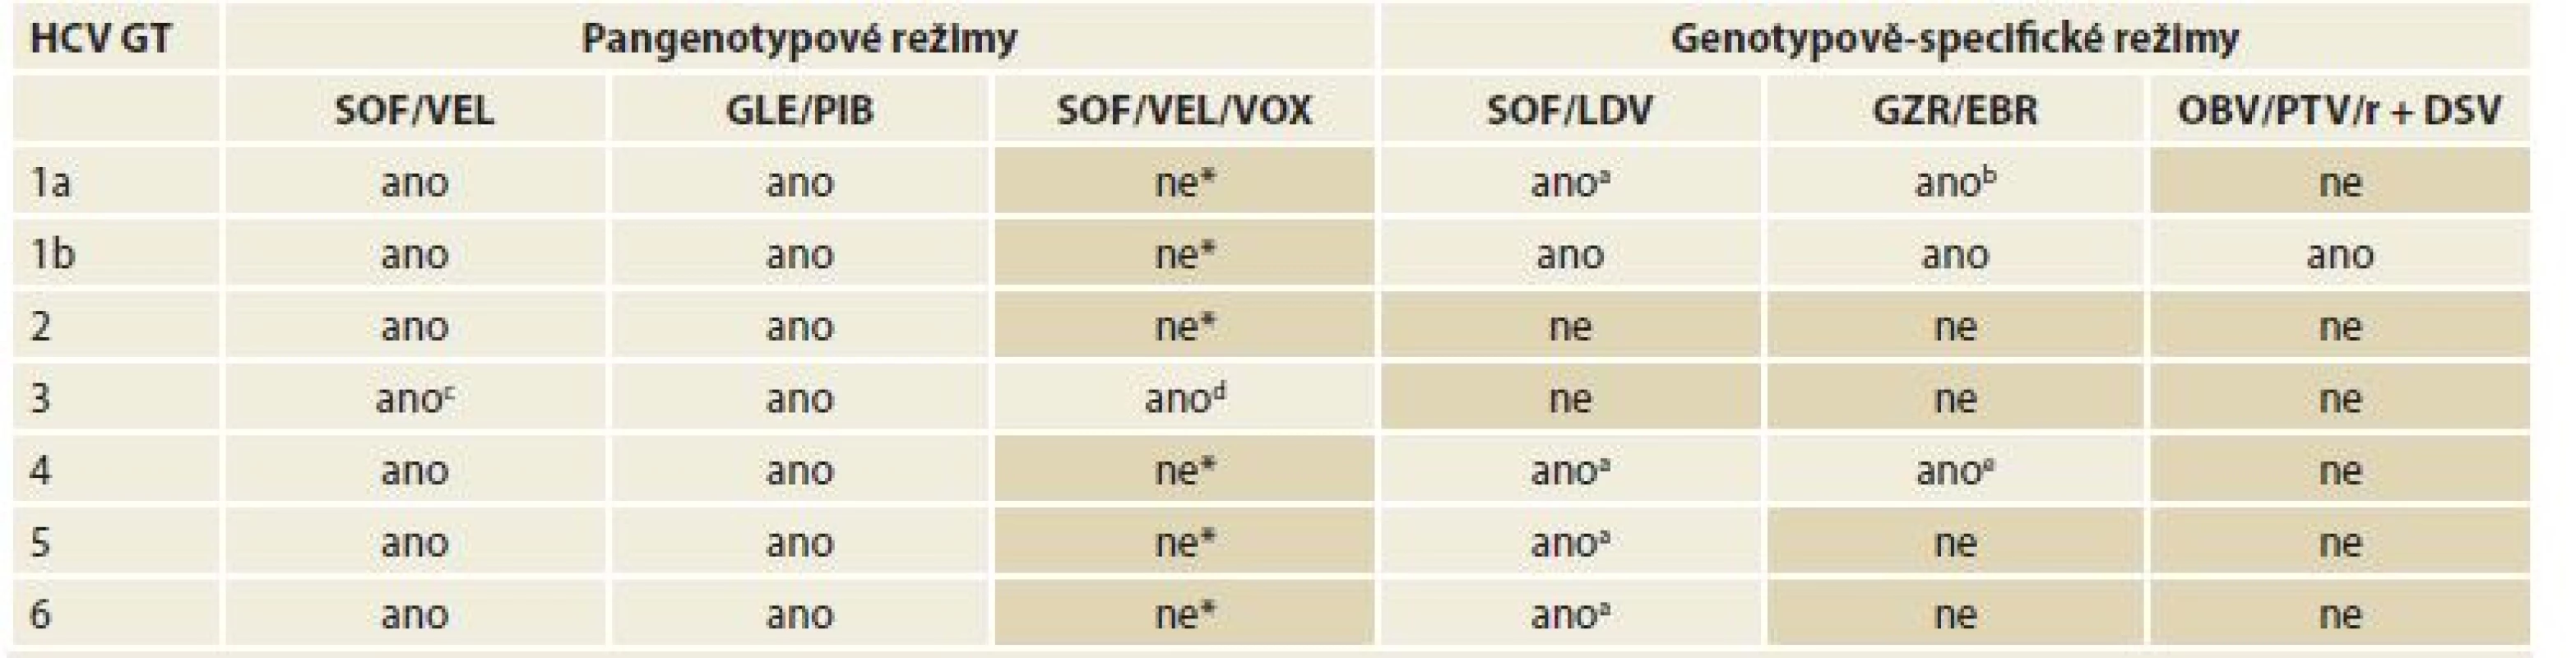 Dostupné varianty bezinterferonových režimů pro jednotlivé genotypy HCV.<br>
Tab. 5. IFN-free combination treatment regimens available for each HCV genotype.